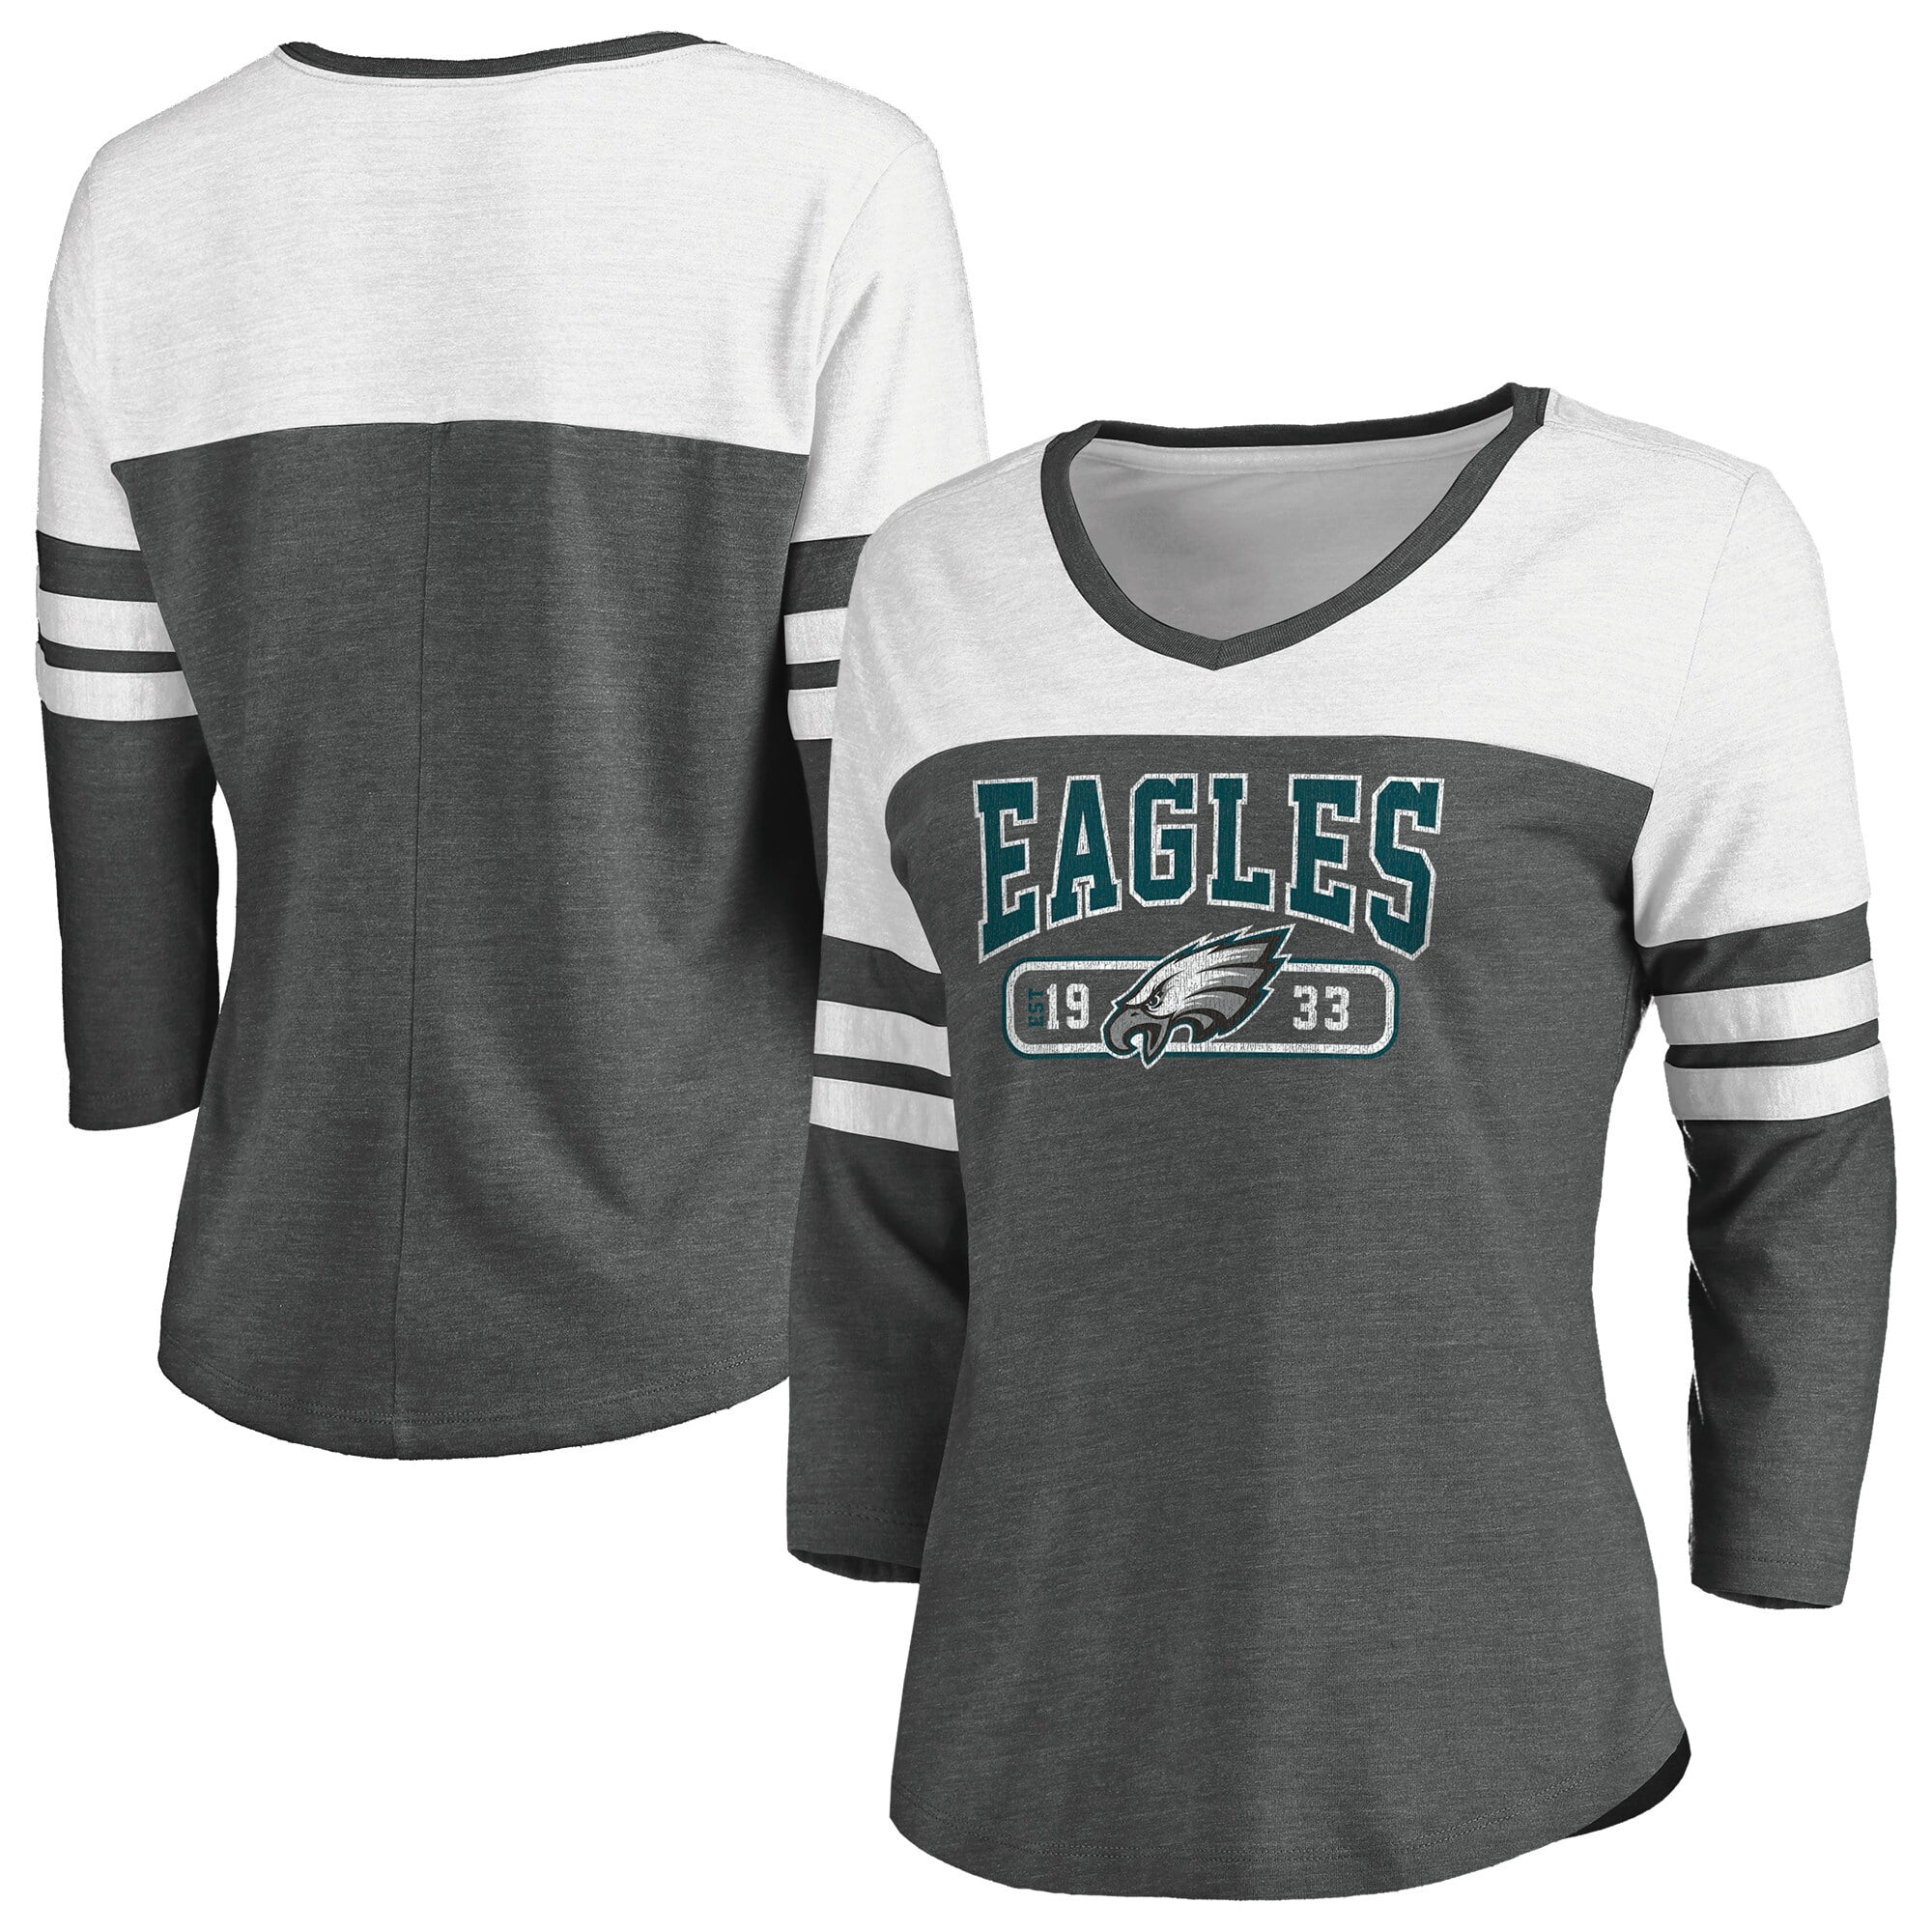 Women's Fanatics Branded Charcoal/White Philadelphia Eagles Vintage Arch  3/4-Sleeve T-Shirt 